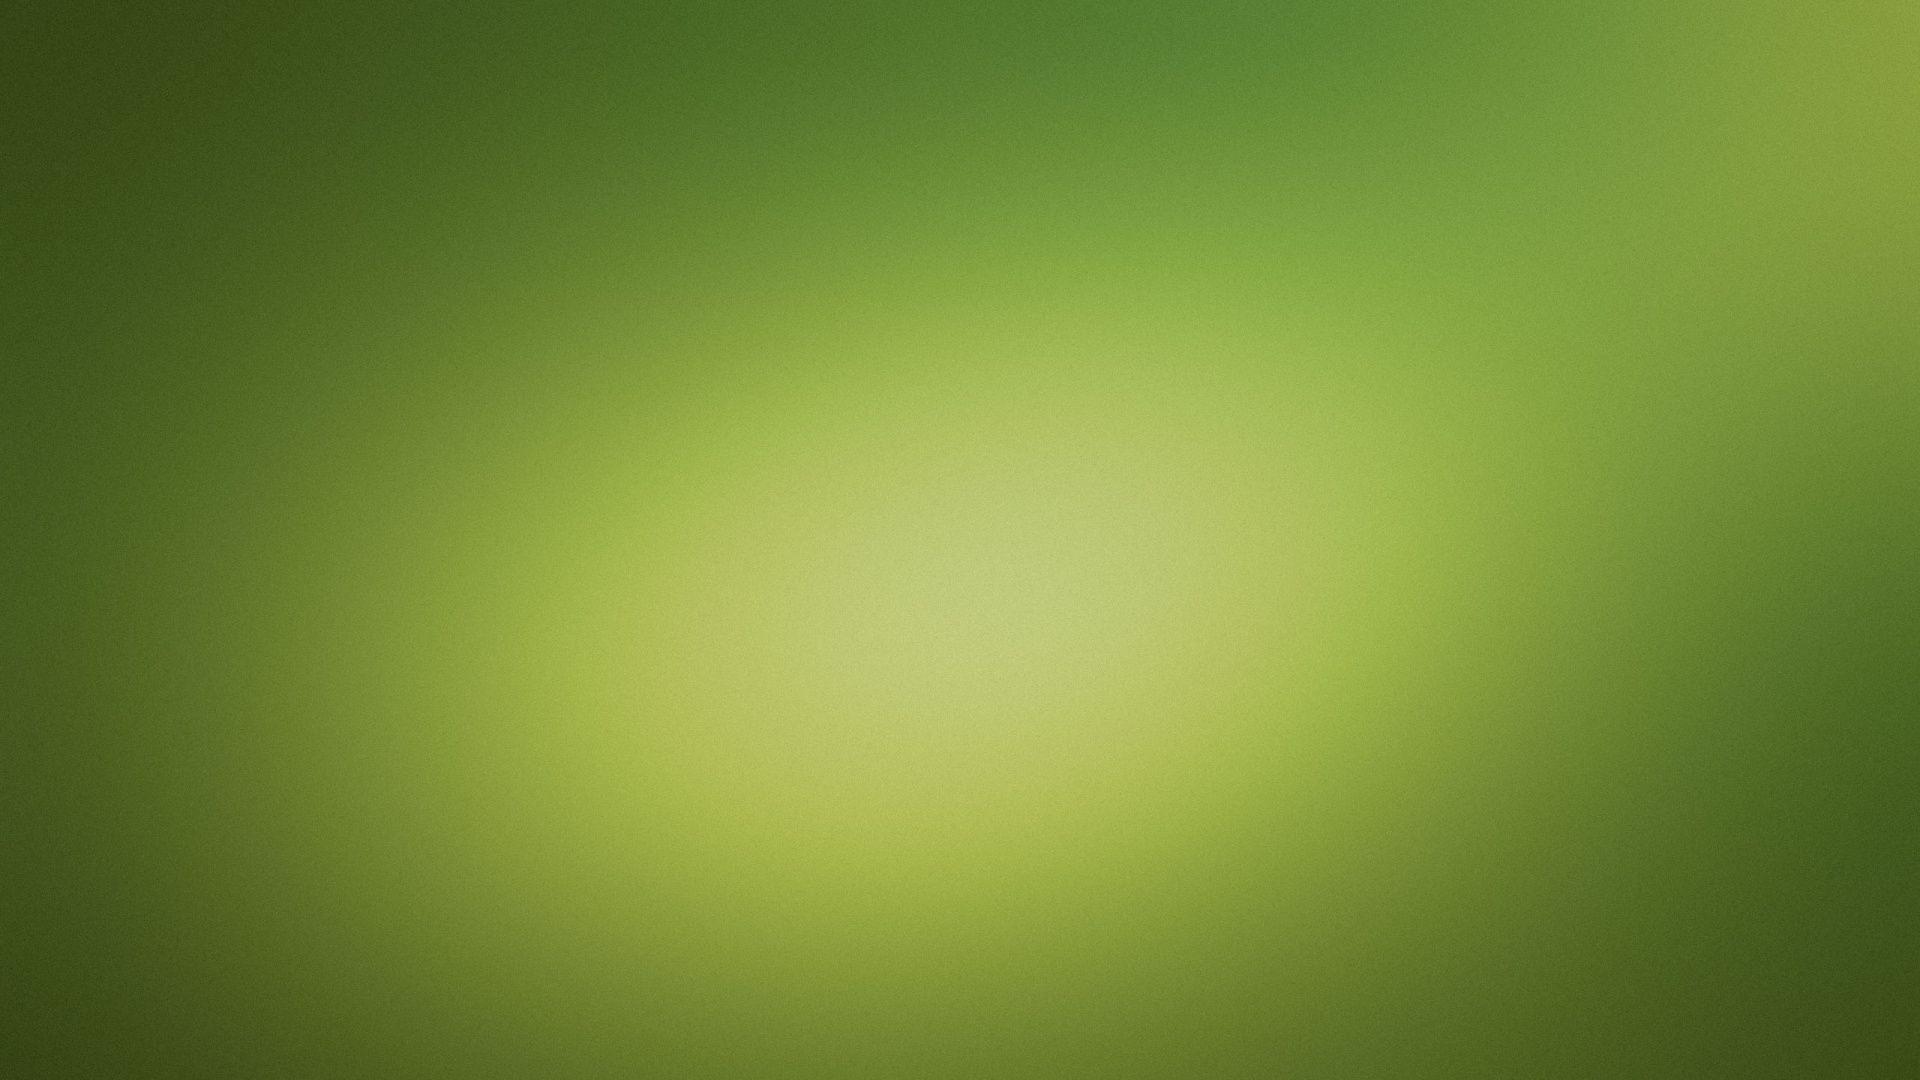 Light Green Background 31853 1920x1080 px